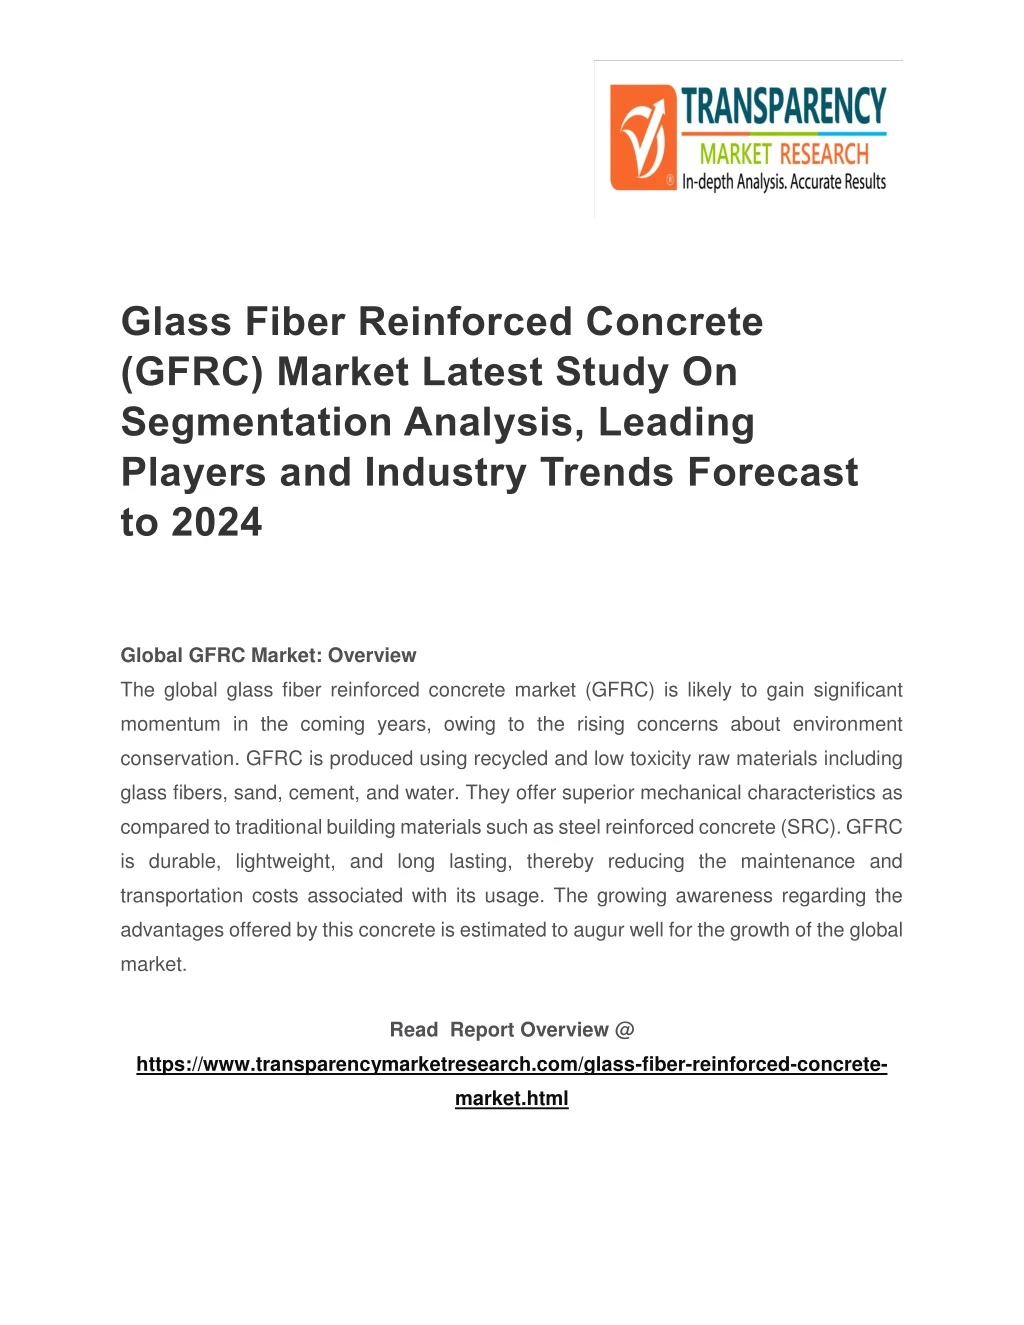 glass fiber reinforced concrete gfrc market